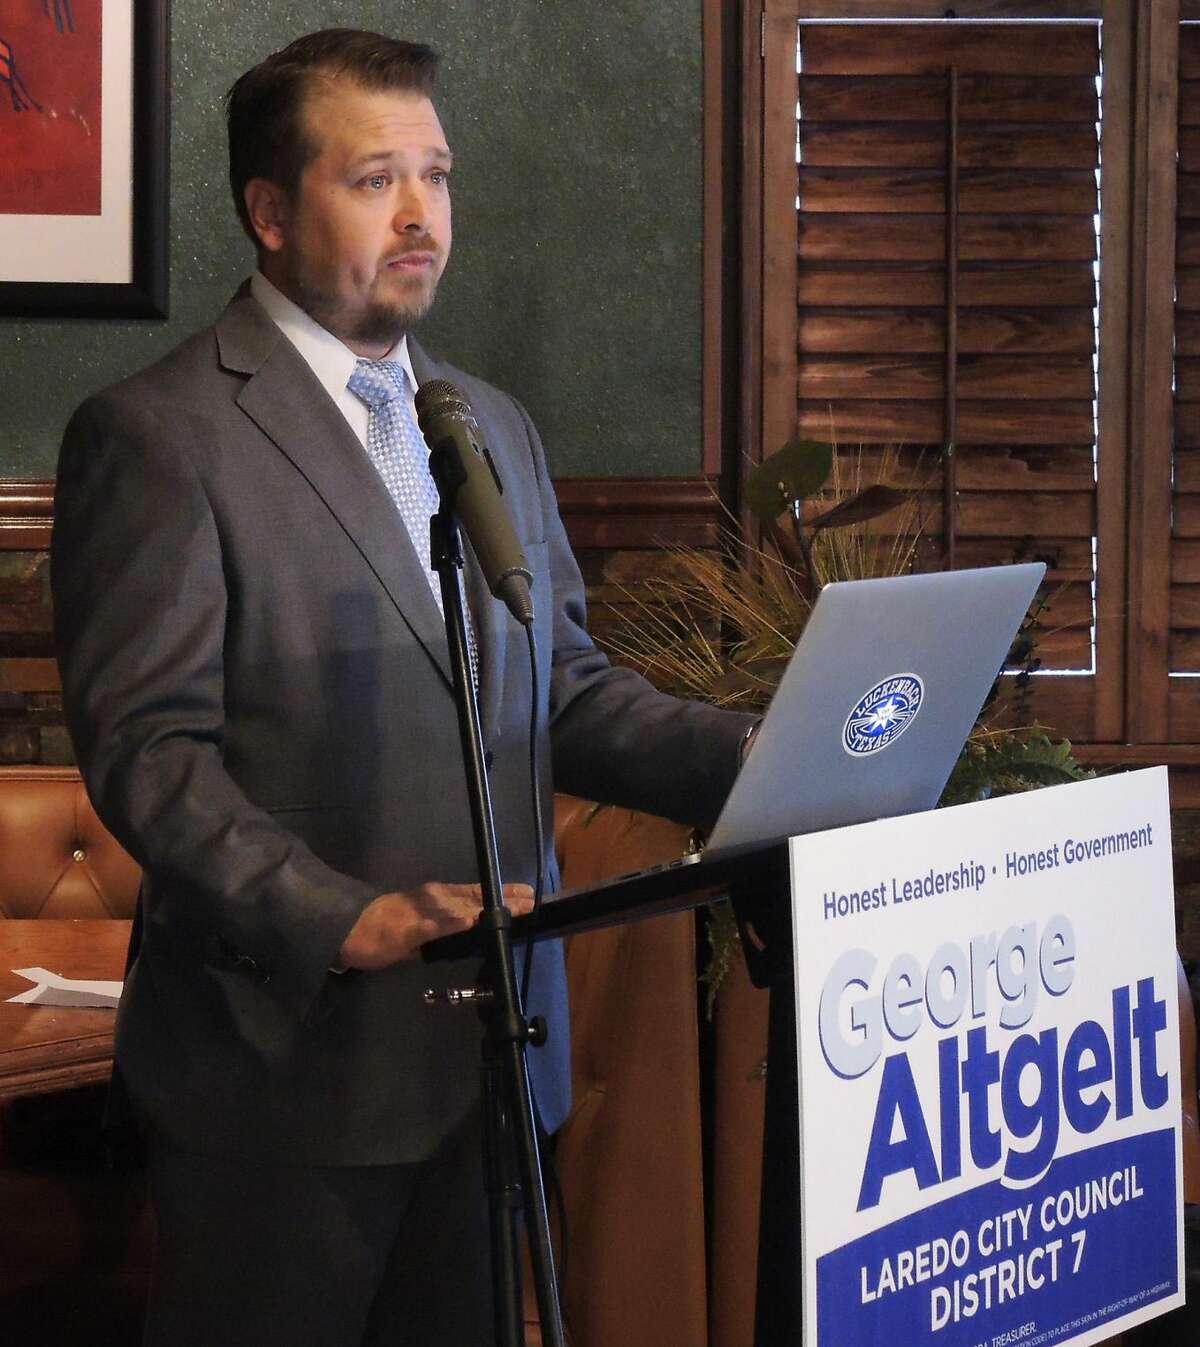 George Altgelt announces his bid for District 7 city councilman on Tuesday. (Courtesy photo)